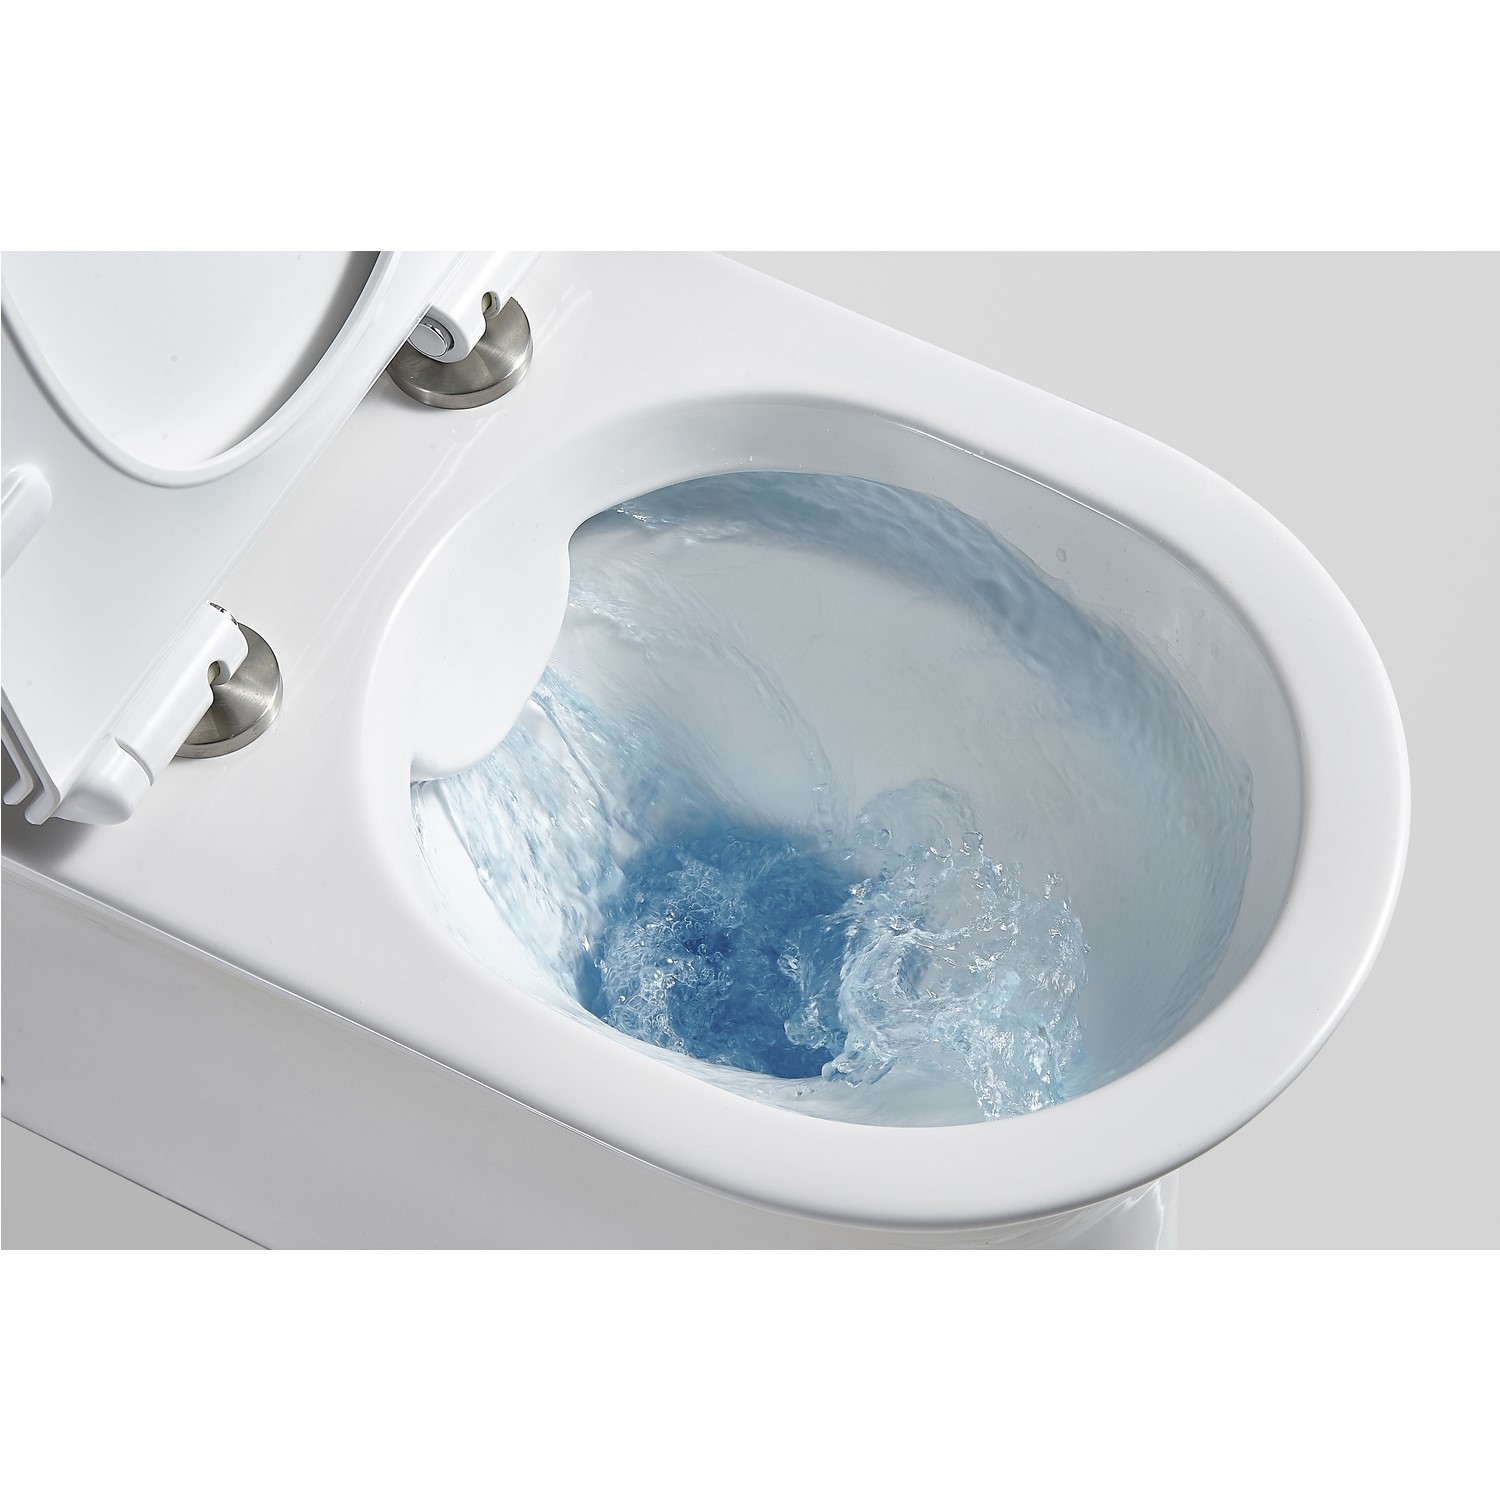 Tranen rib Regulatie Close Coupled Rimless Comfort Height Toilet with Soft Close Slim Seat -  Indiana - Better Bathrooms